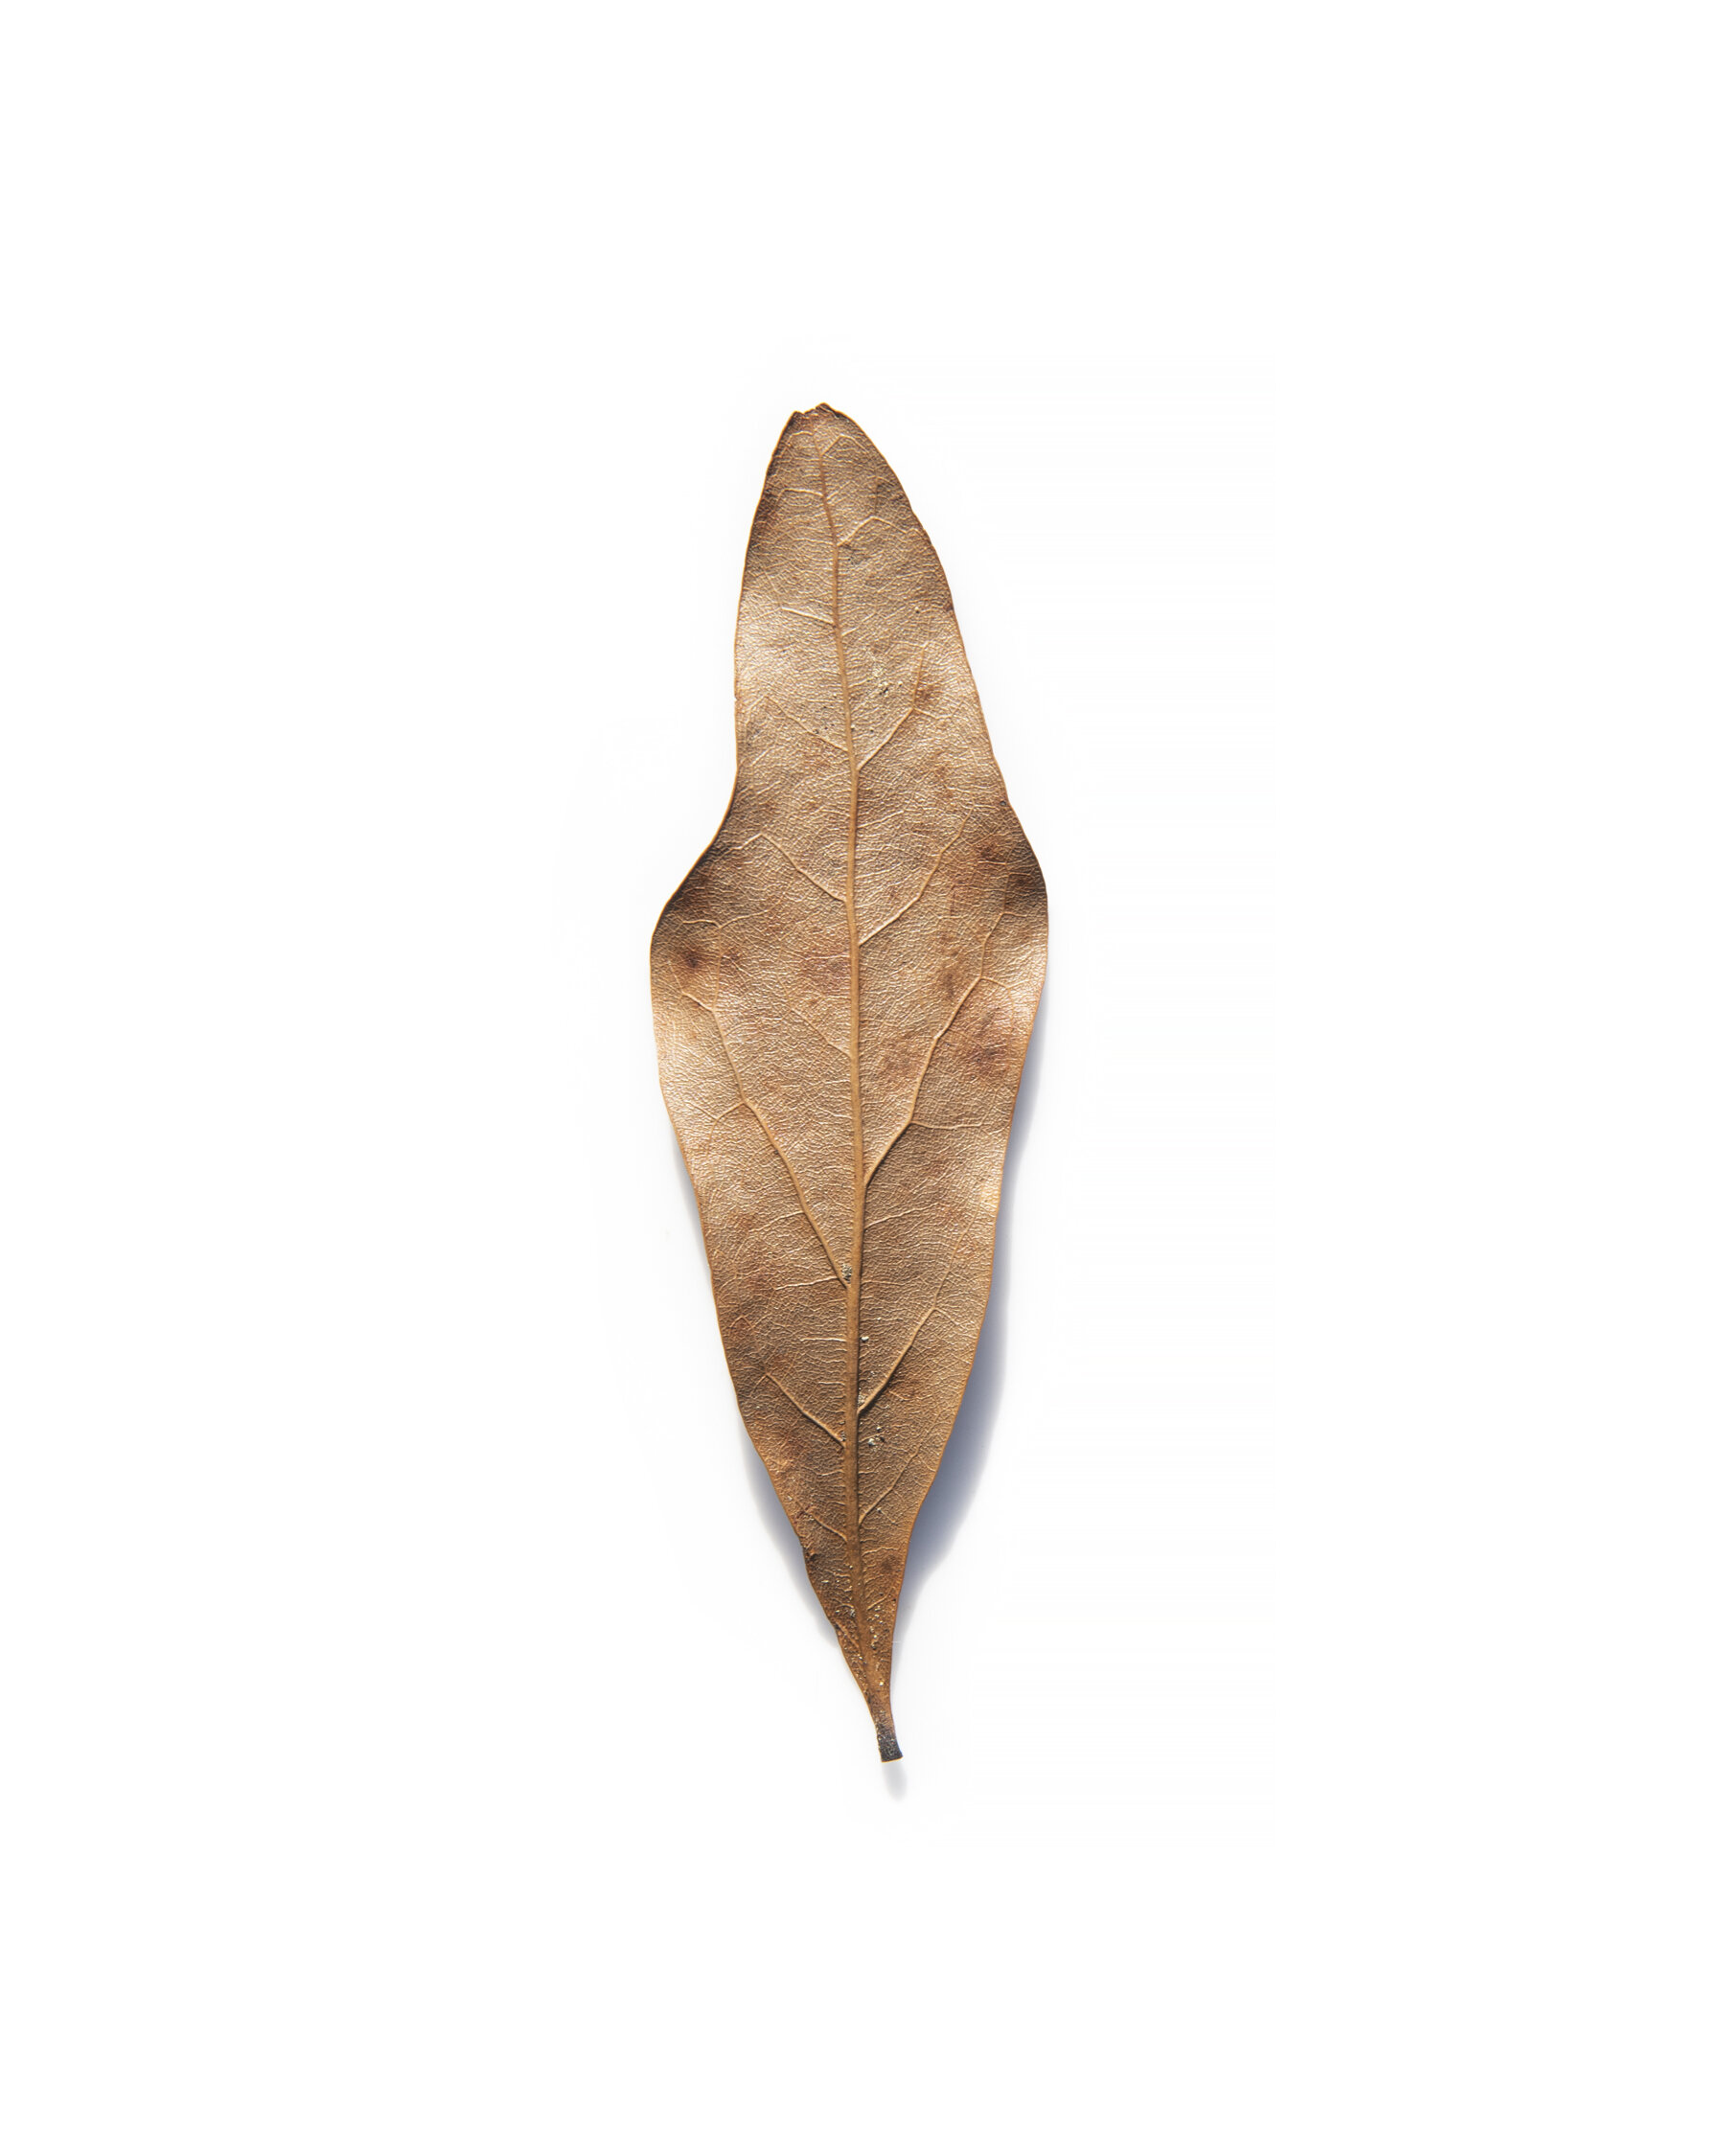 5623_Quercus_hemisphaerica_darlington_oak_leaf_2.jpg